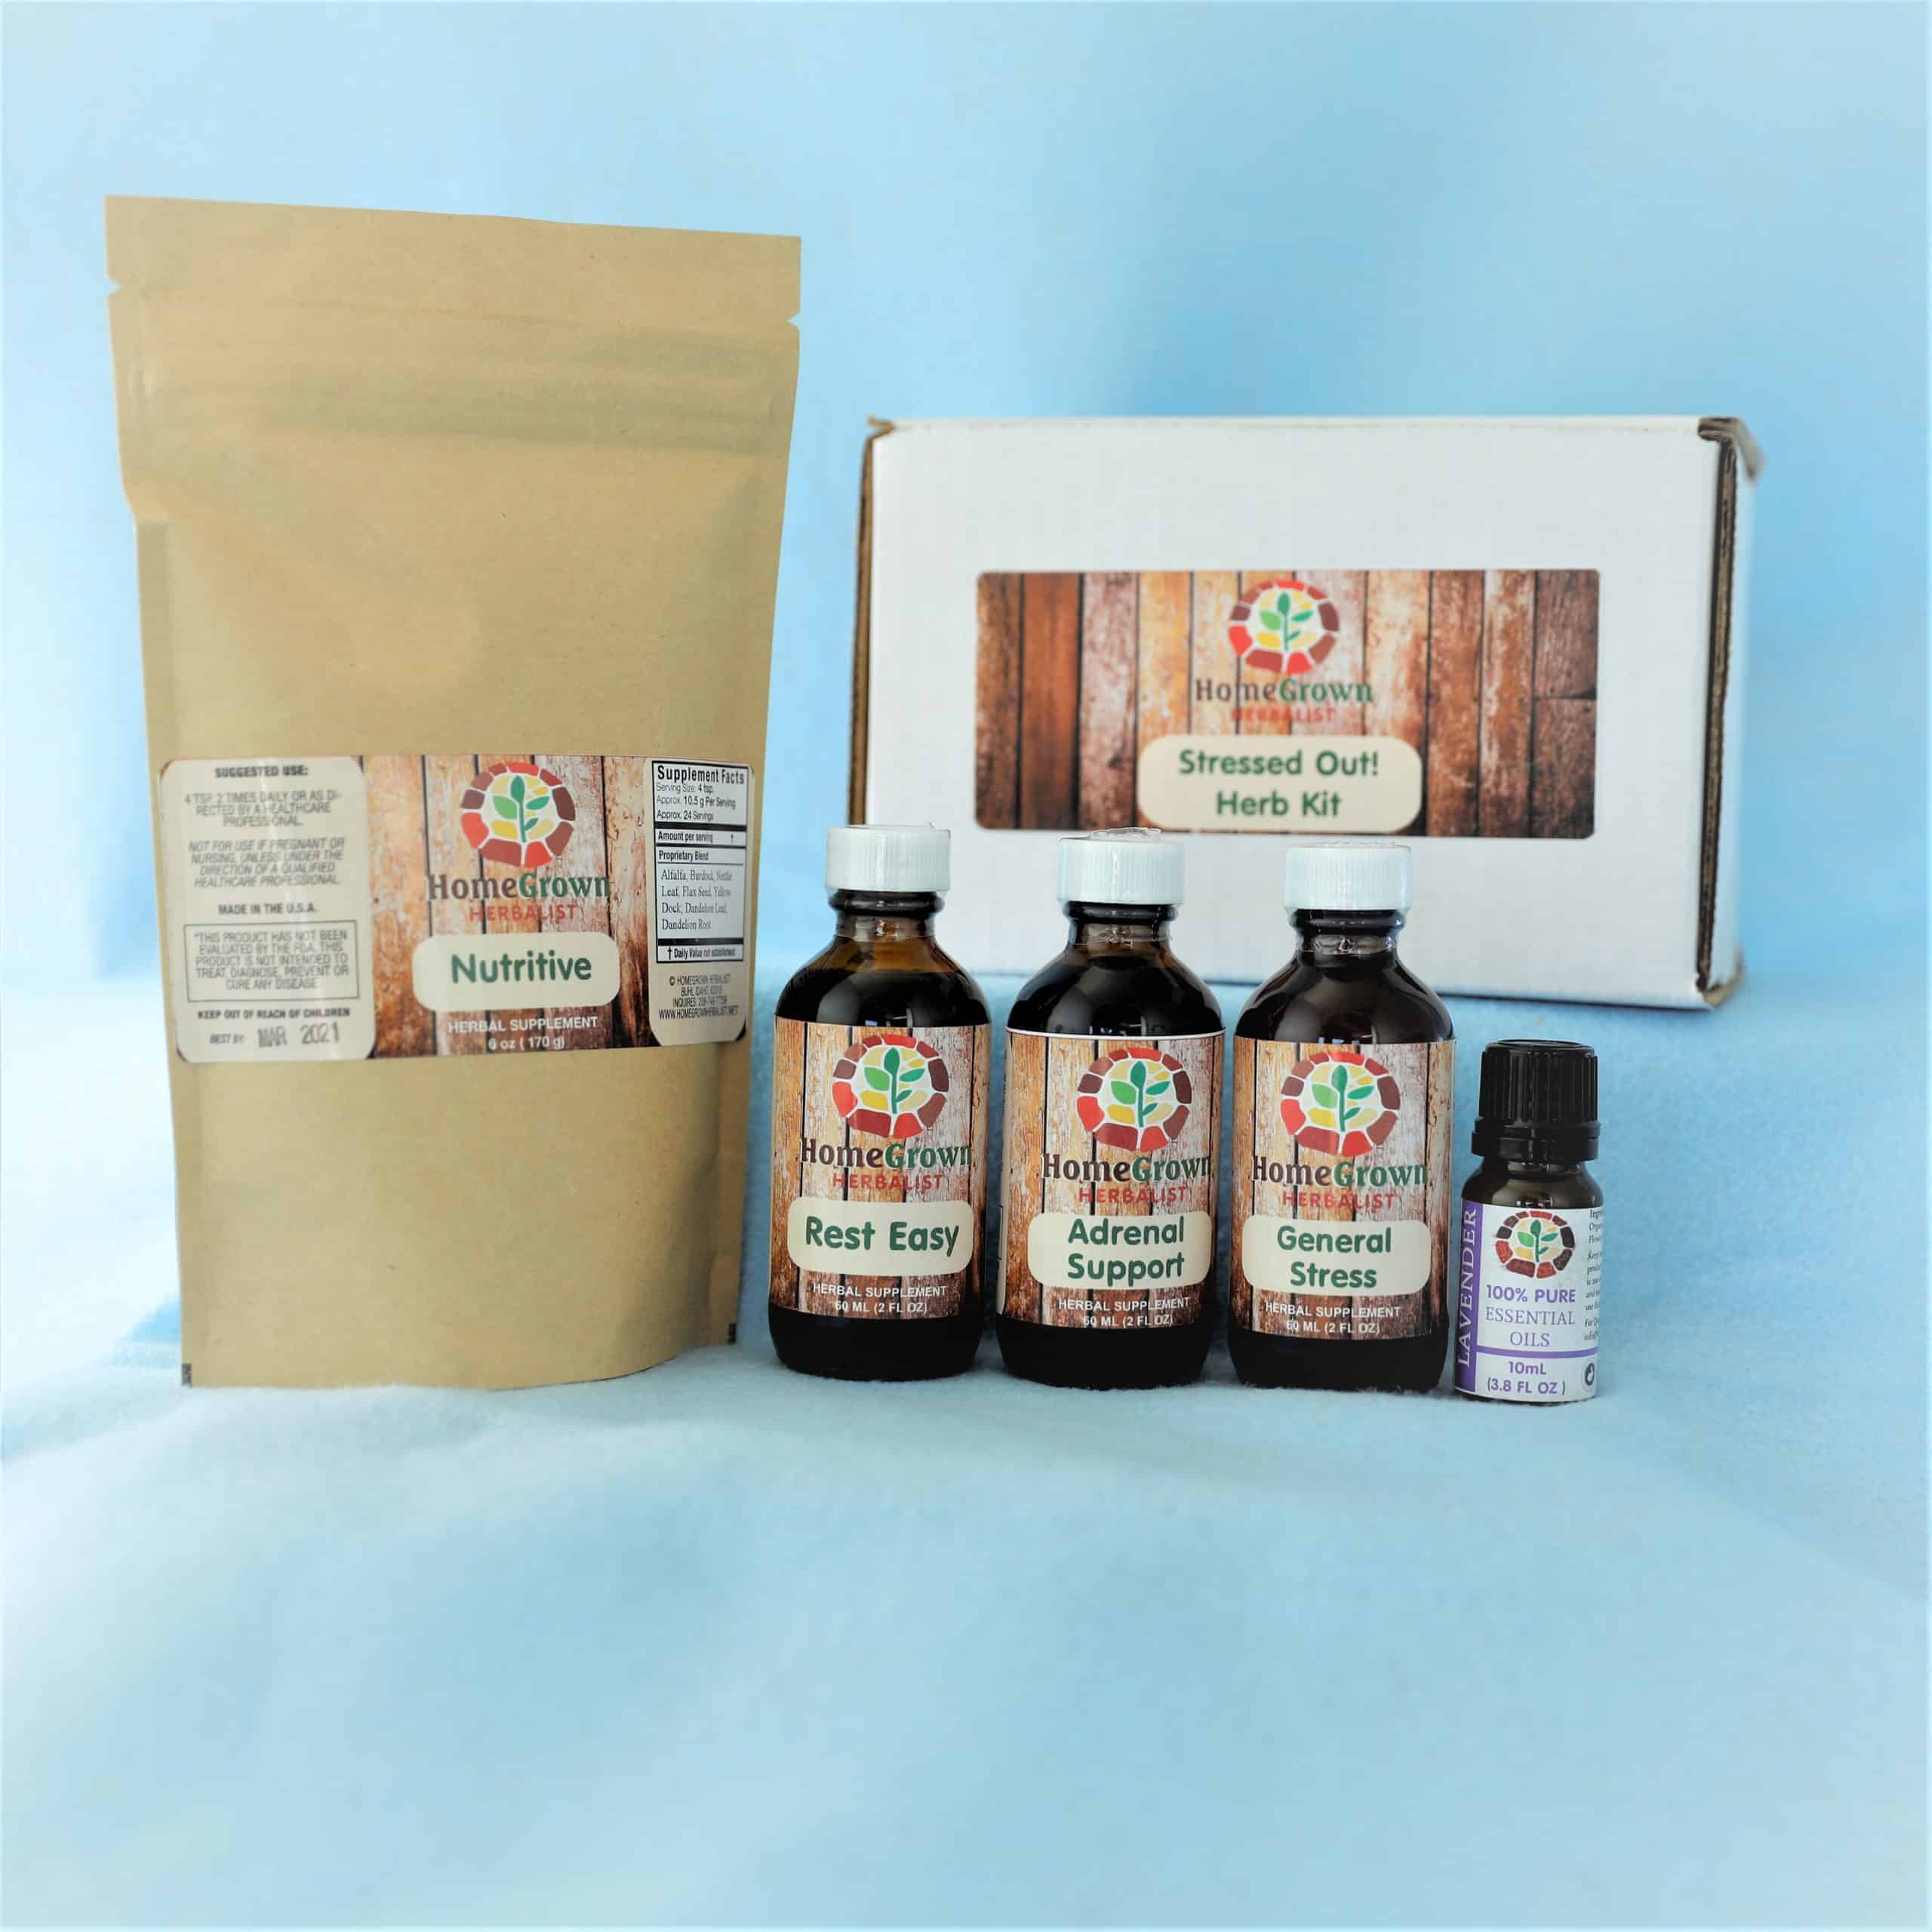 general stress herb kit